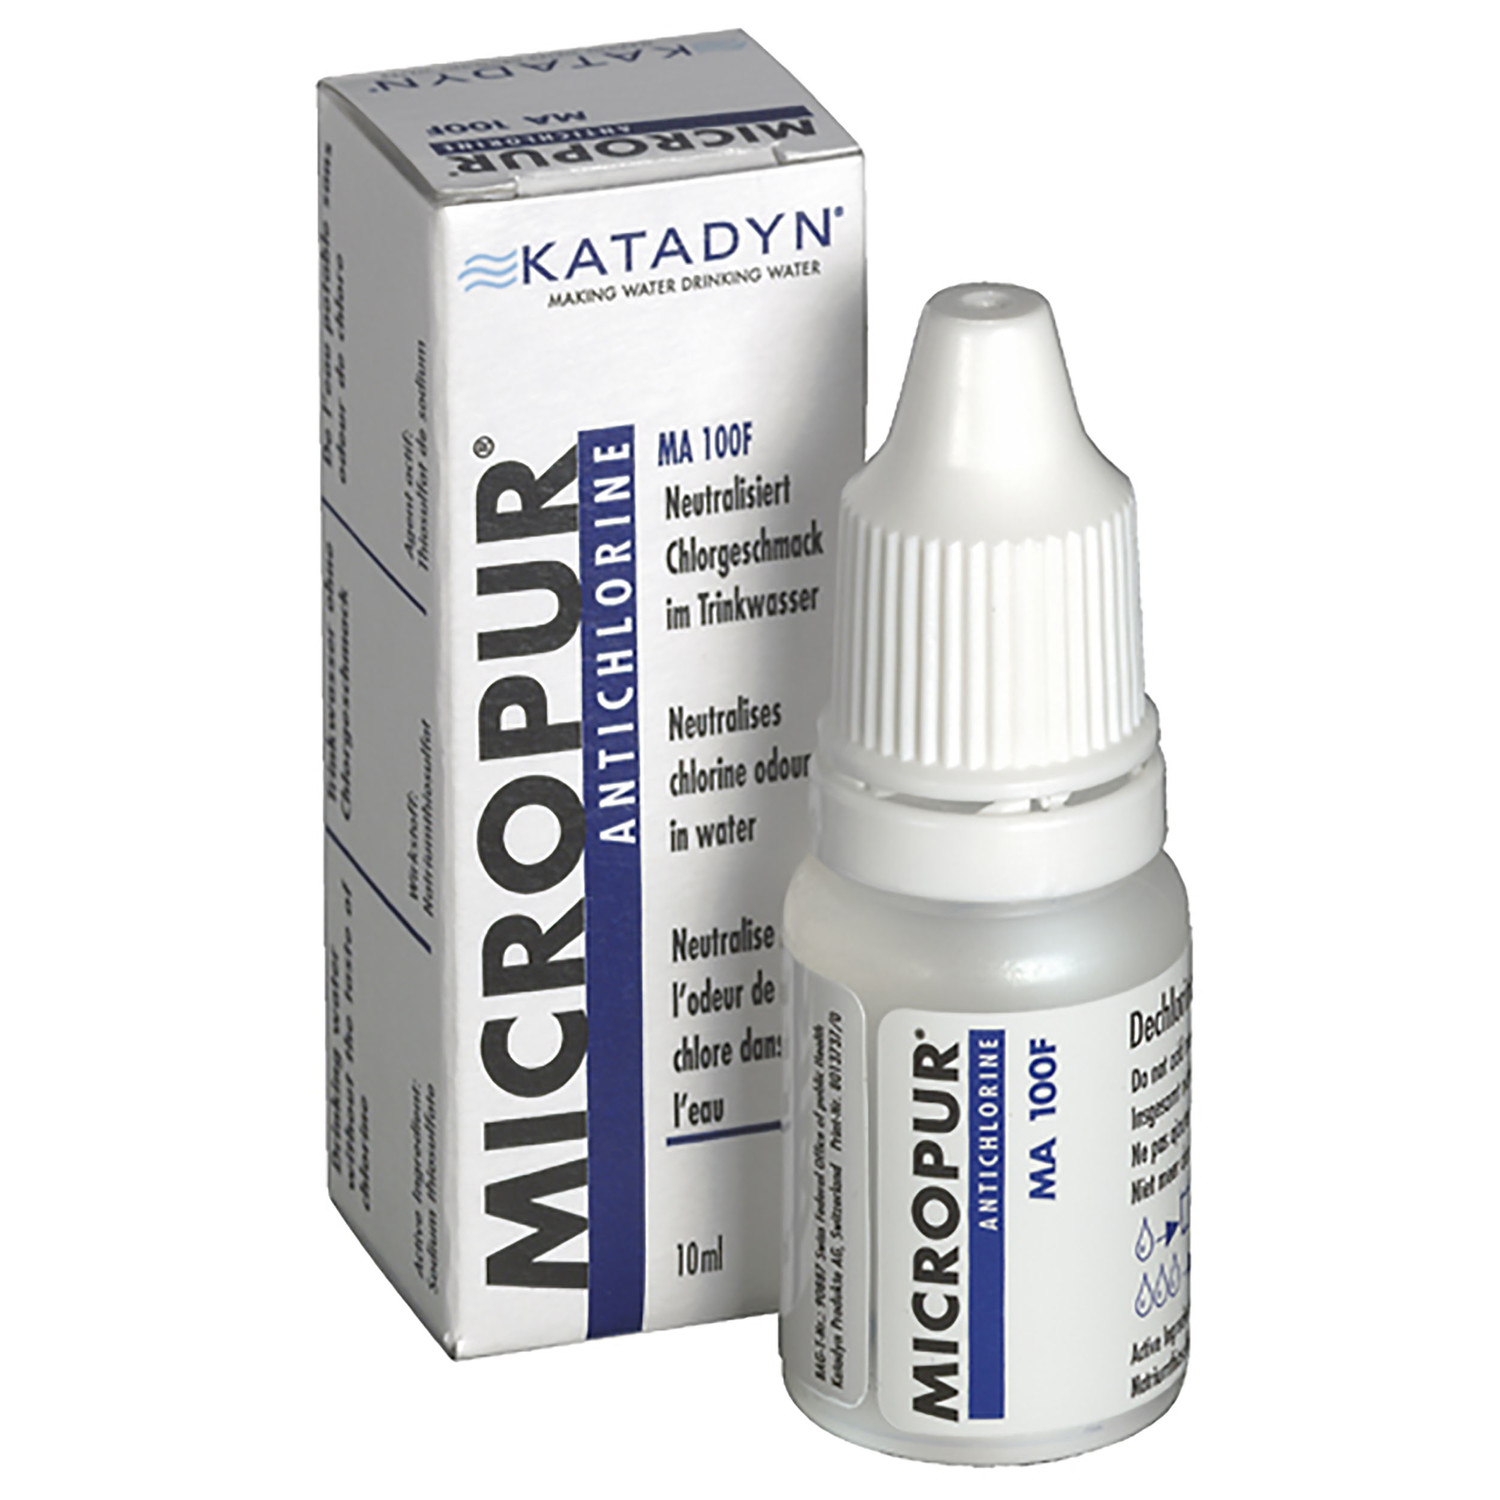 Katadyn Micropur Antichlorine MA 100F neutralisiert Chlorgeschmack